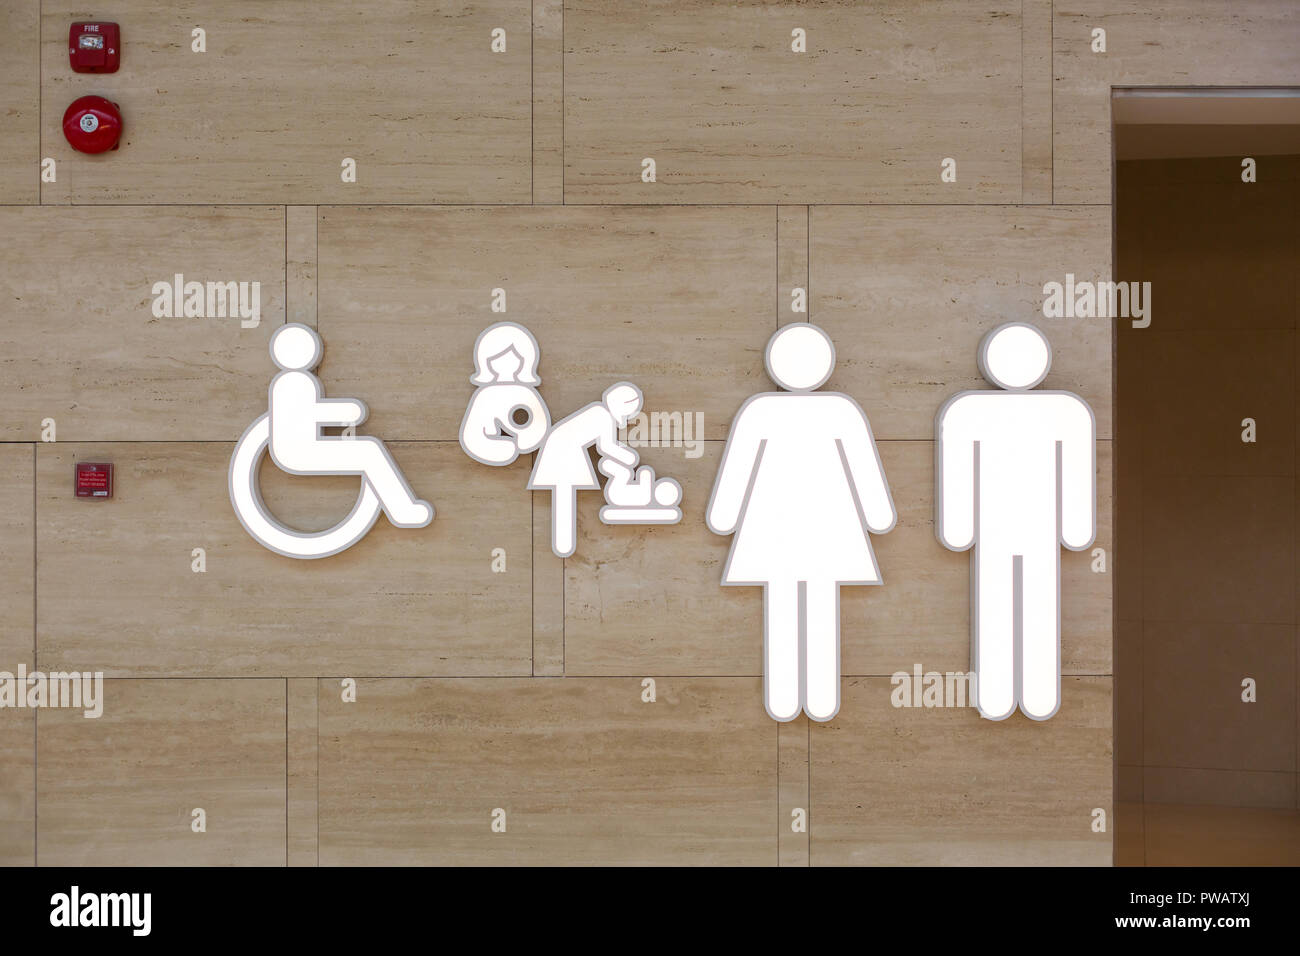 Toilet symbols at Singapore Changi Airport. Stock Photo